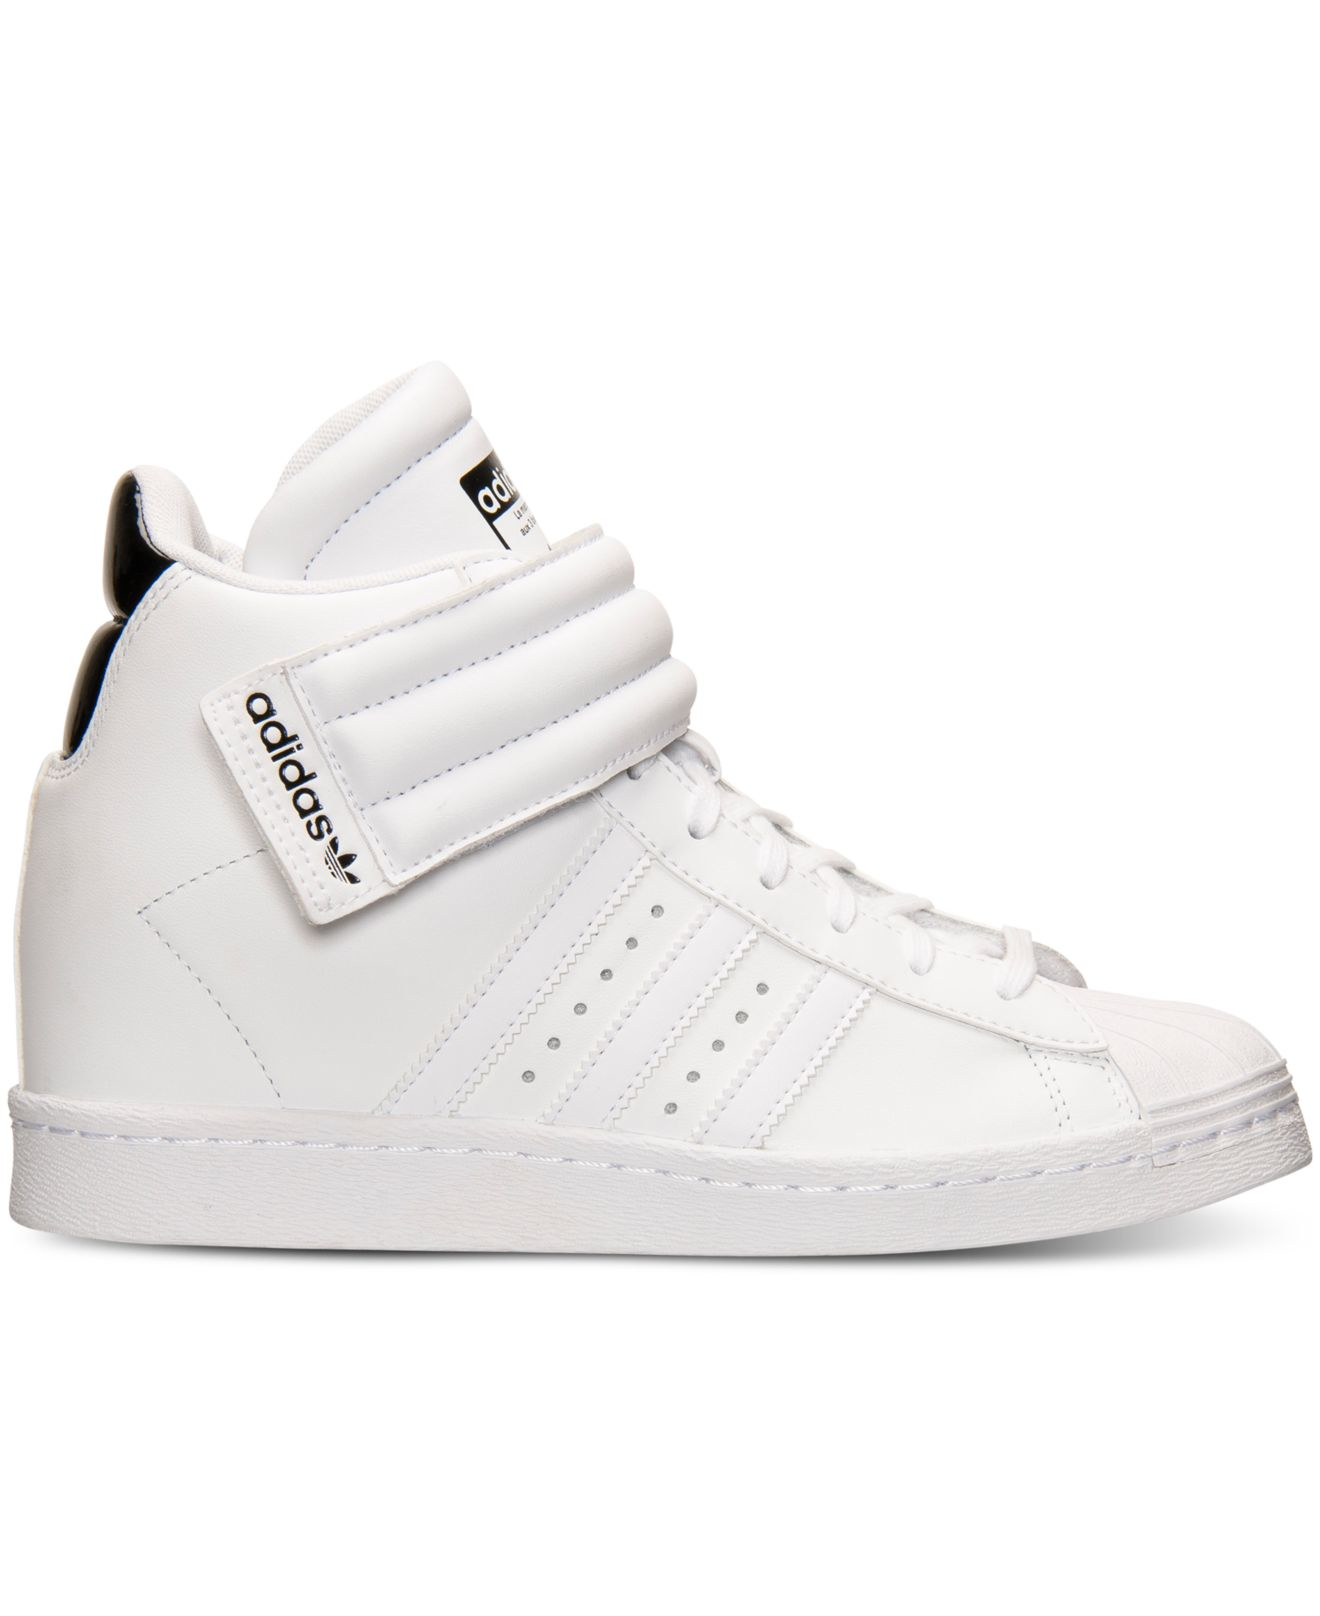 Adidas Superstar Up $89.99 Sneakerhead s79382